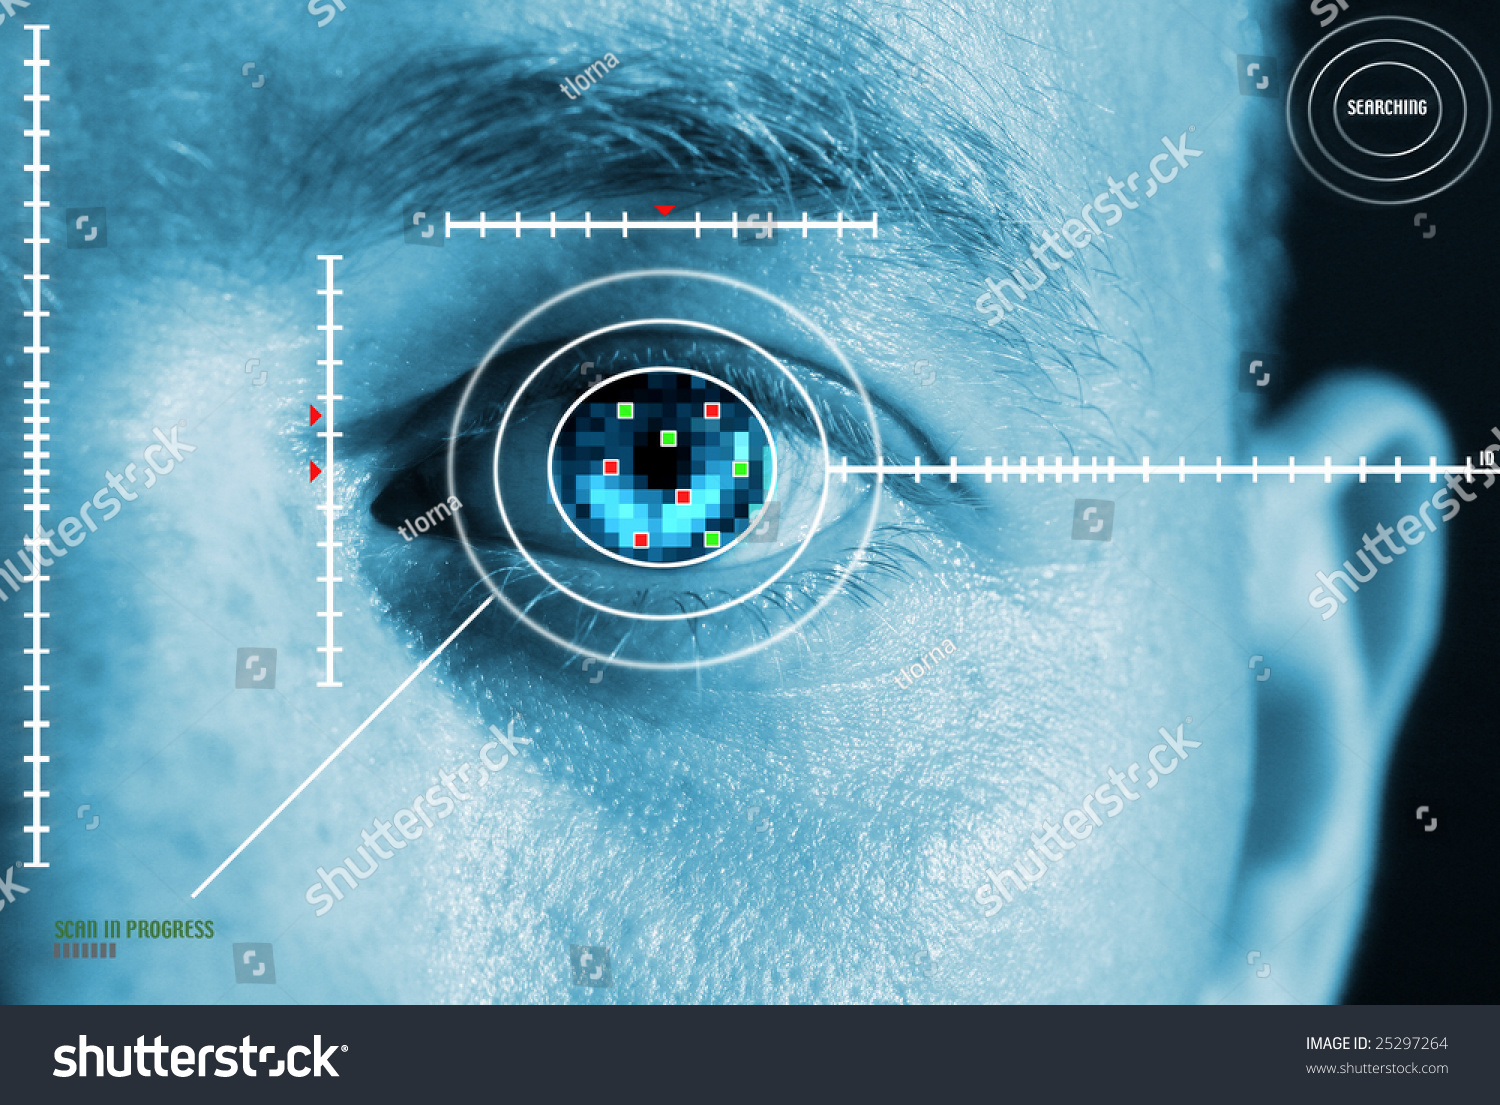 Iris Scan Security Identification Eye Scanner Stock Photo 25297264 - Shutterstock